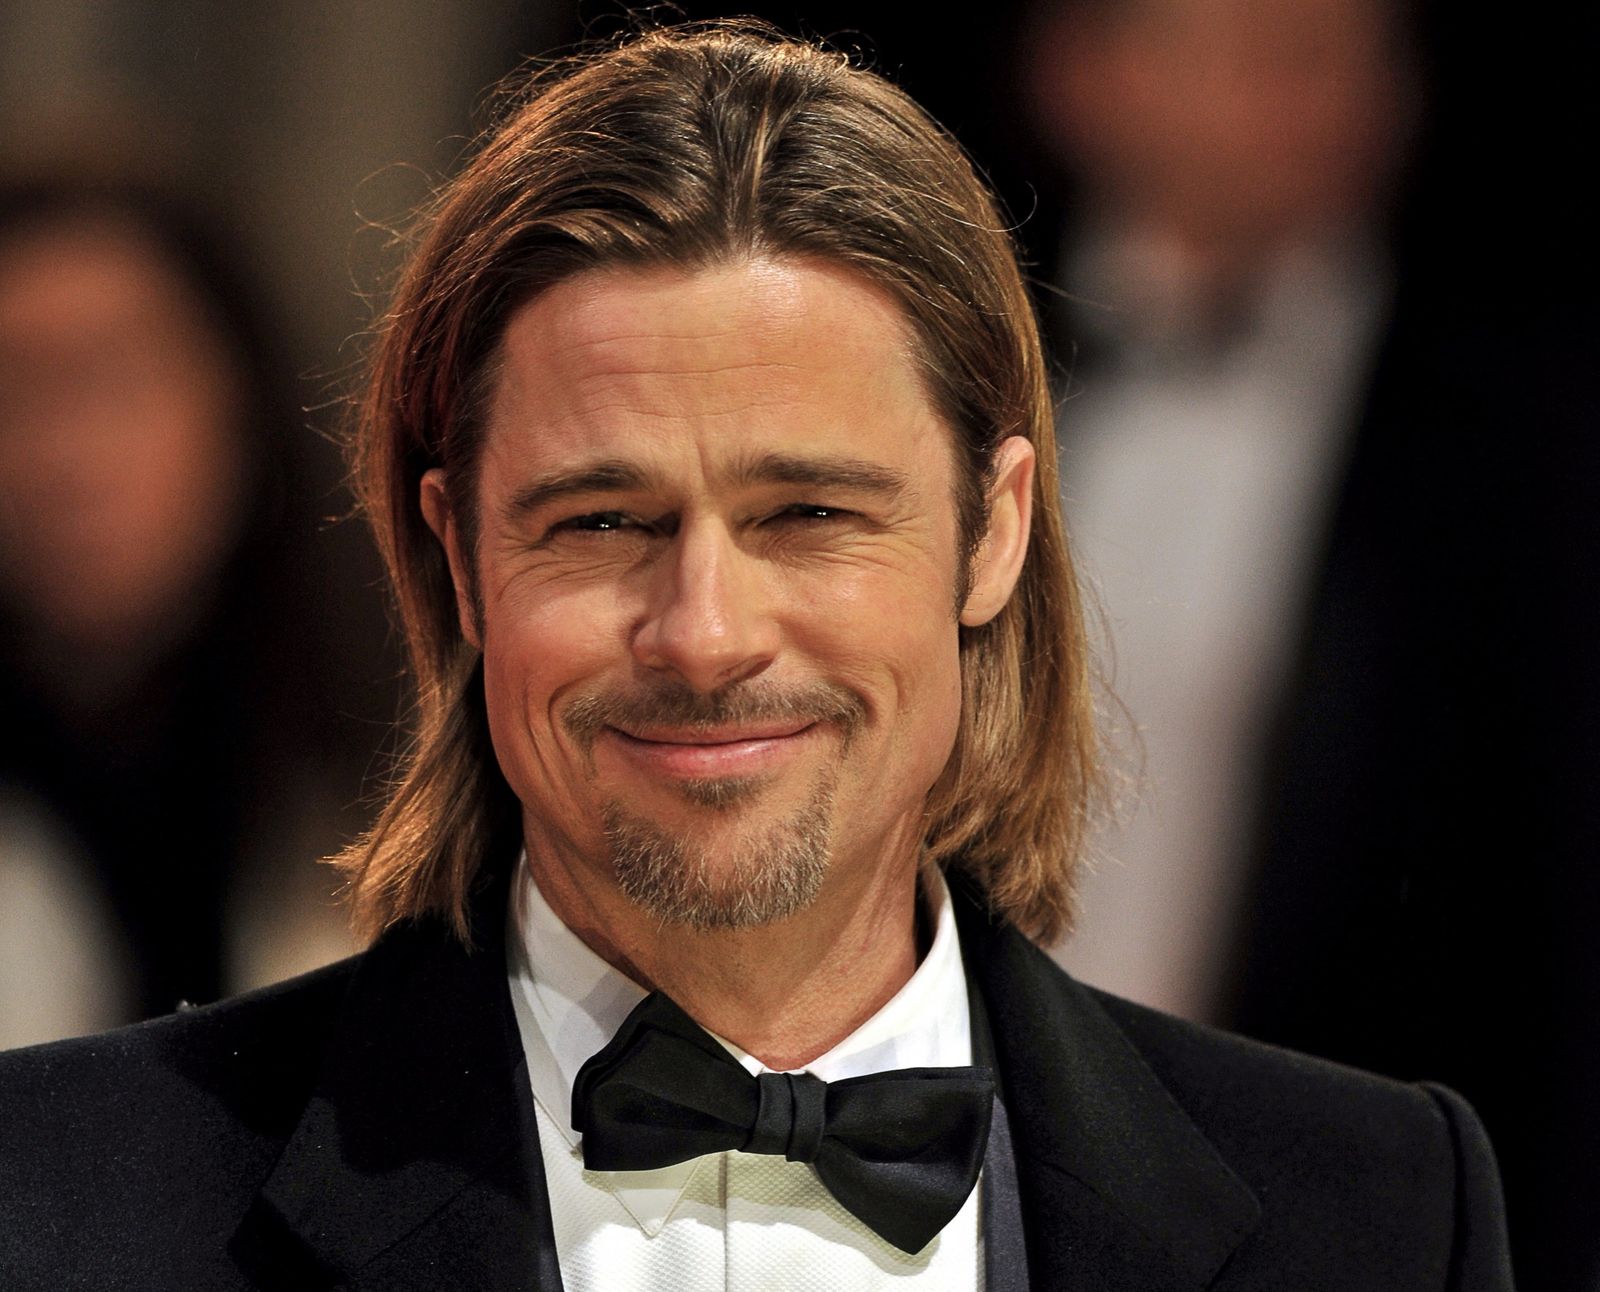 Brad Pitt Dating Someone As Big As Angelina?